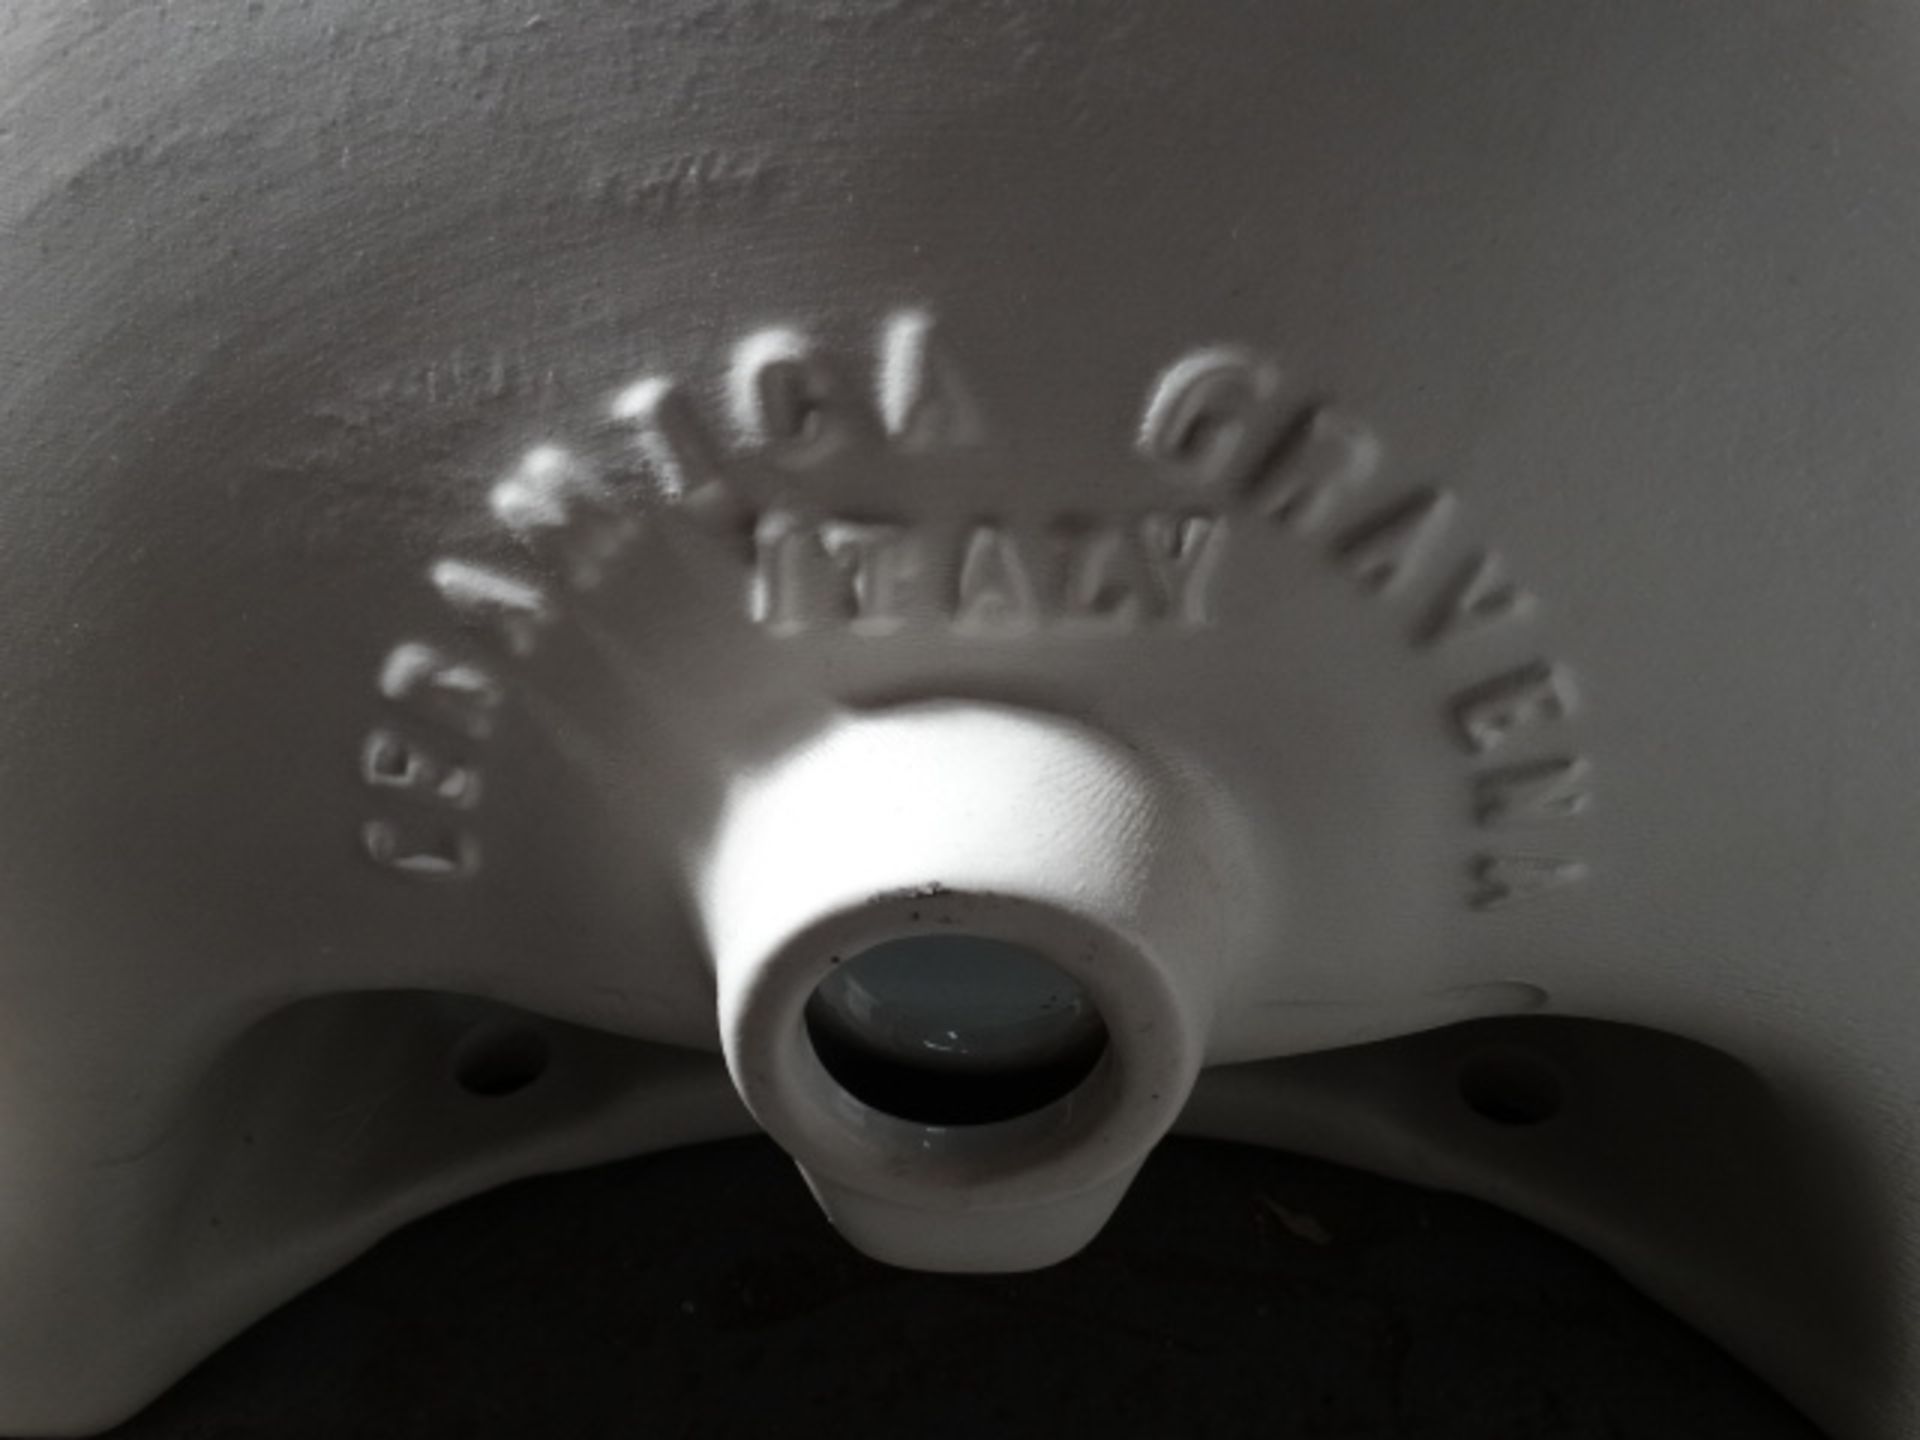 Basin Ceramica Gravena Italy Single hole White ceramic 600x450x200mm - Image 4 of 7